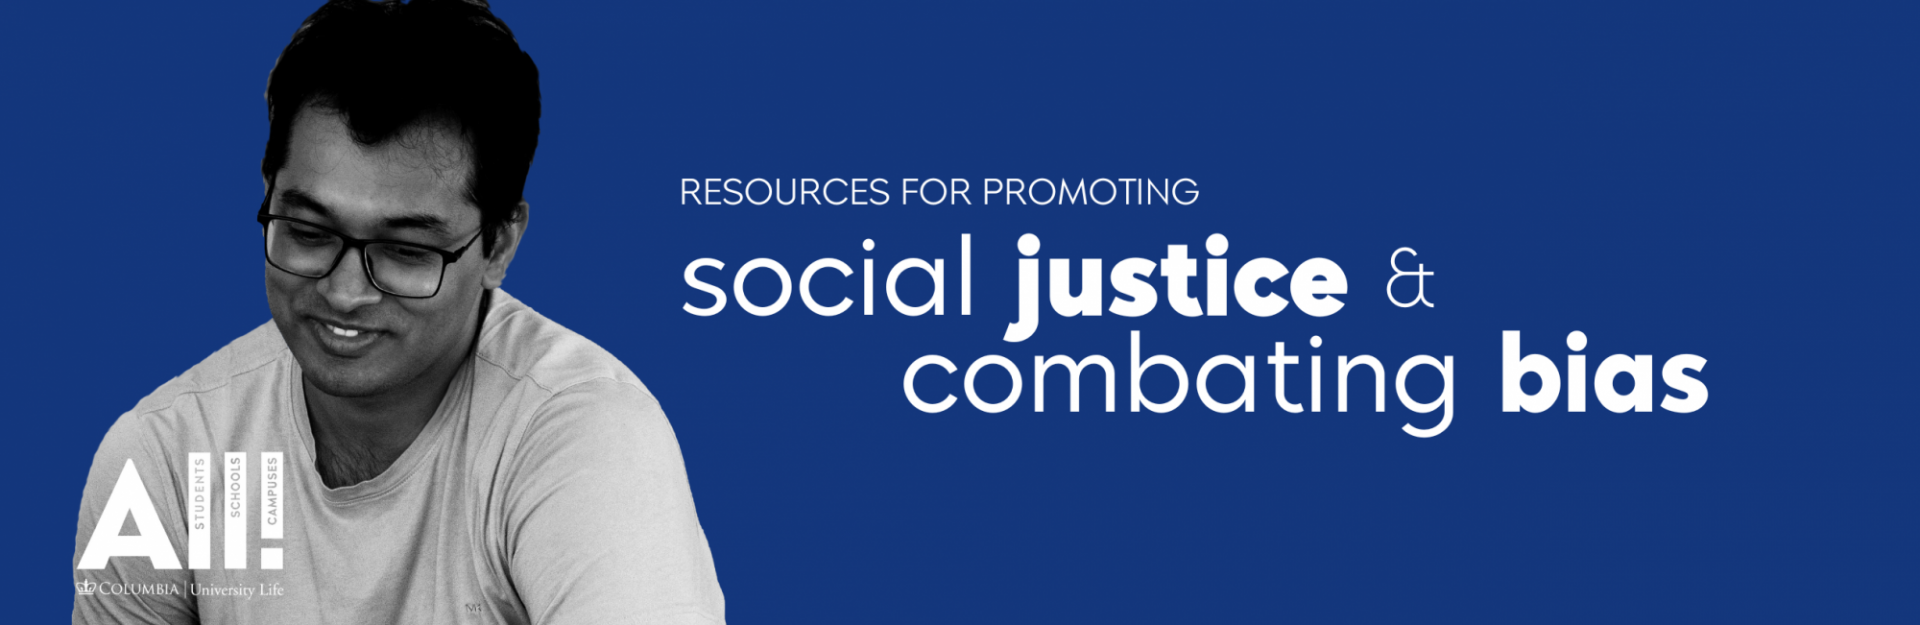 social justice and combating bias hero image